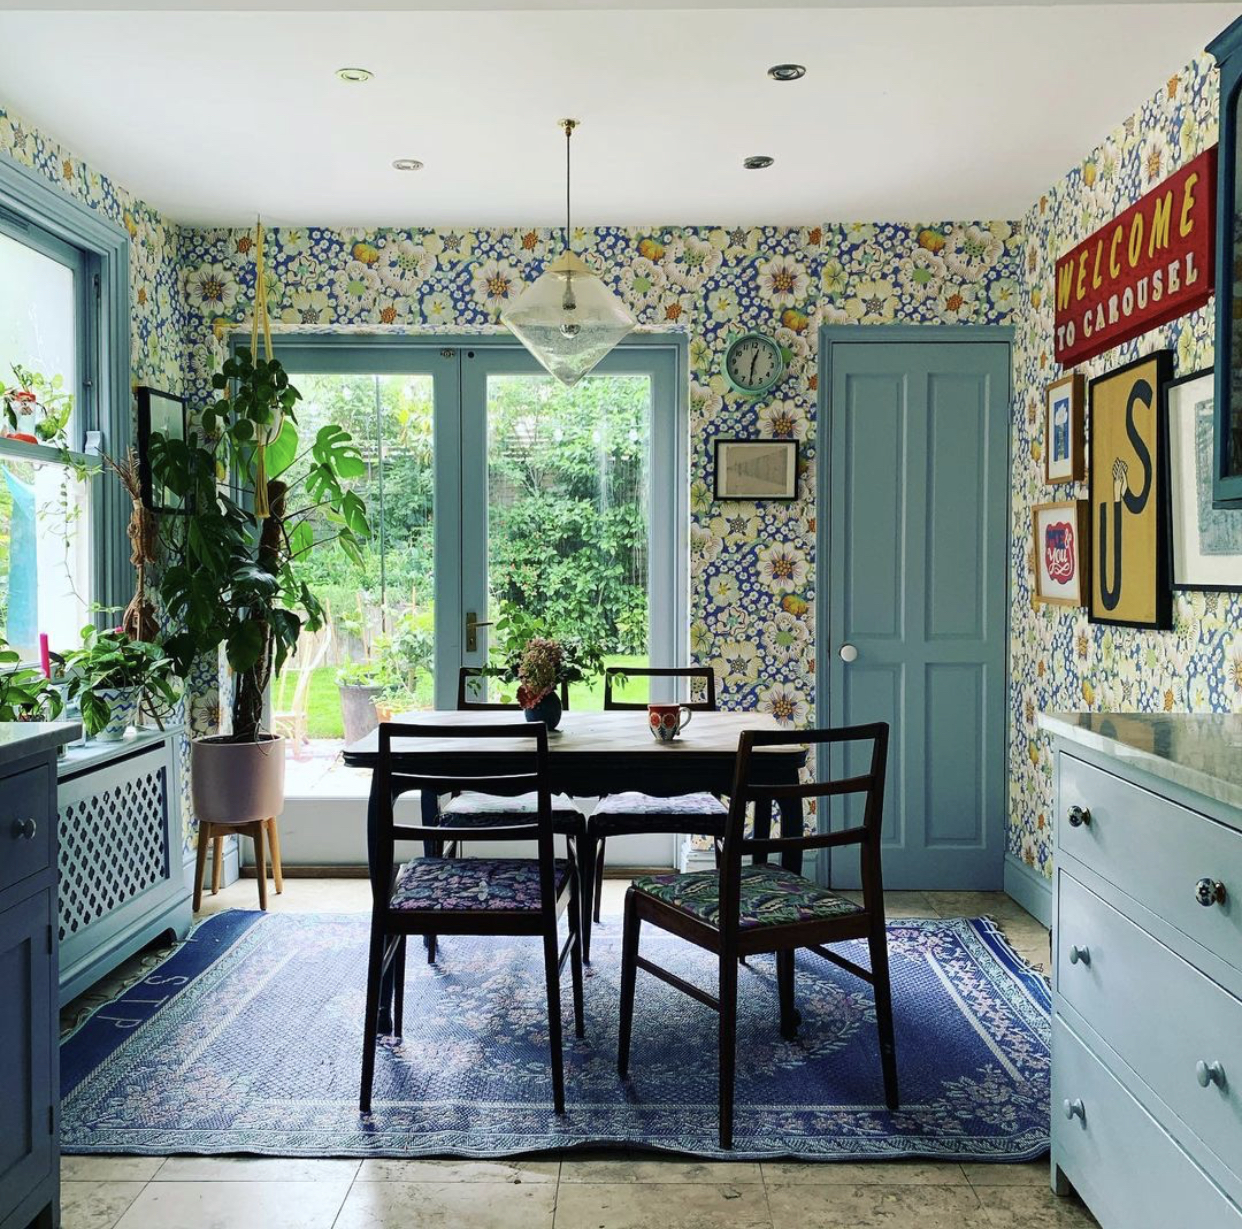 wallpaper kitchen by guira design